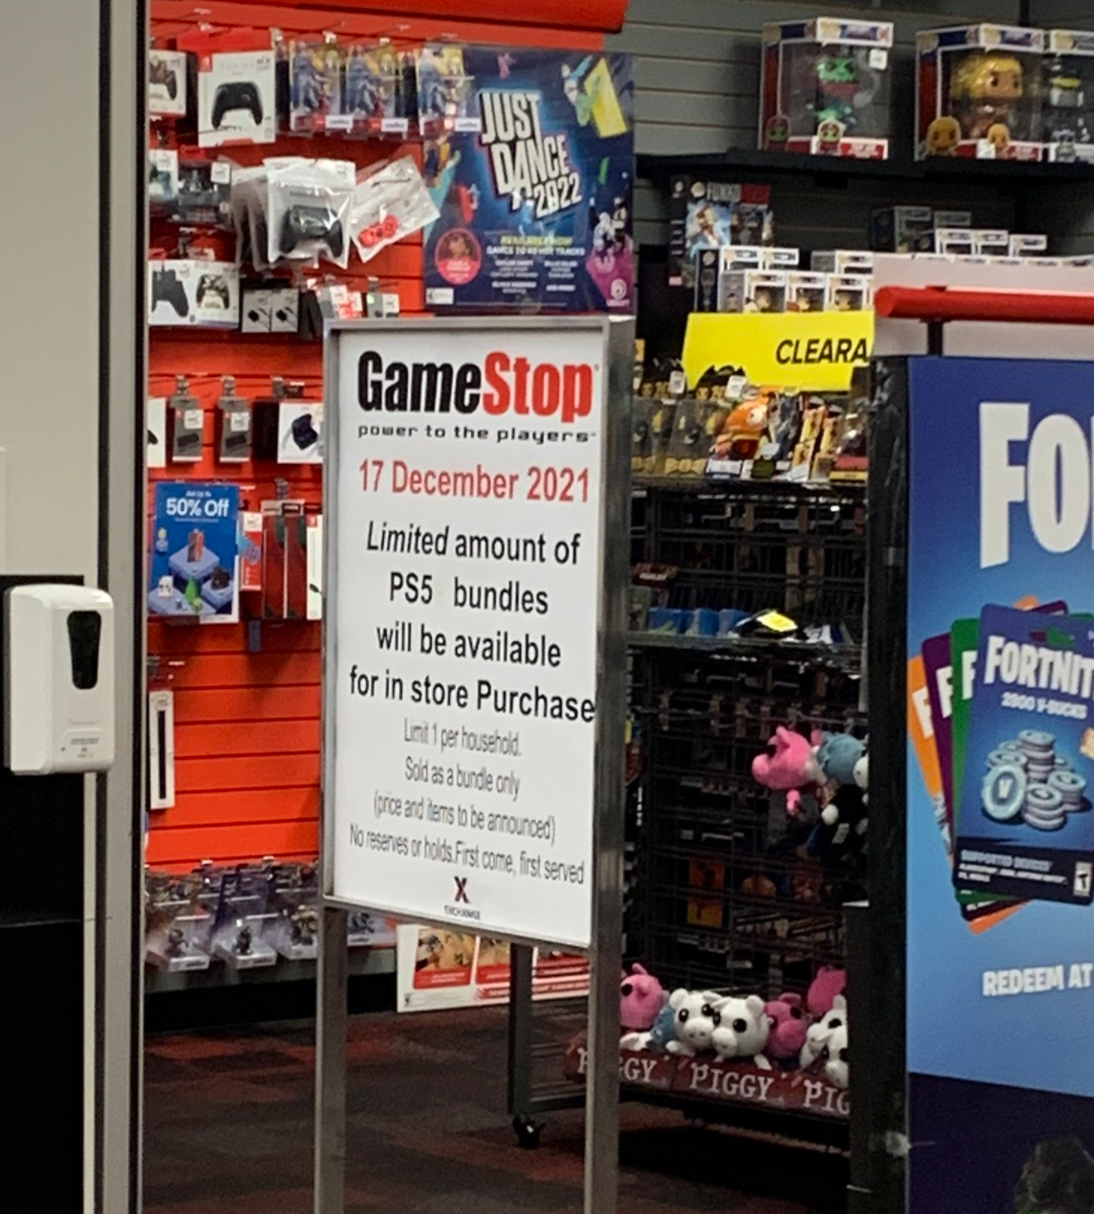 PS5 Restock At GameStop Stores Confirmed For December 17